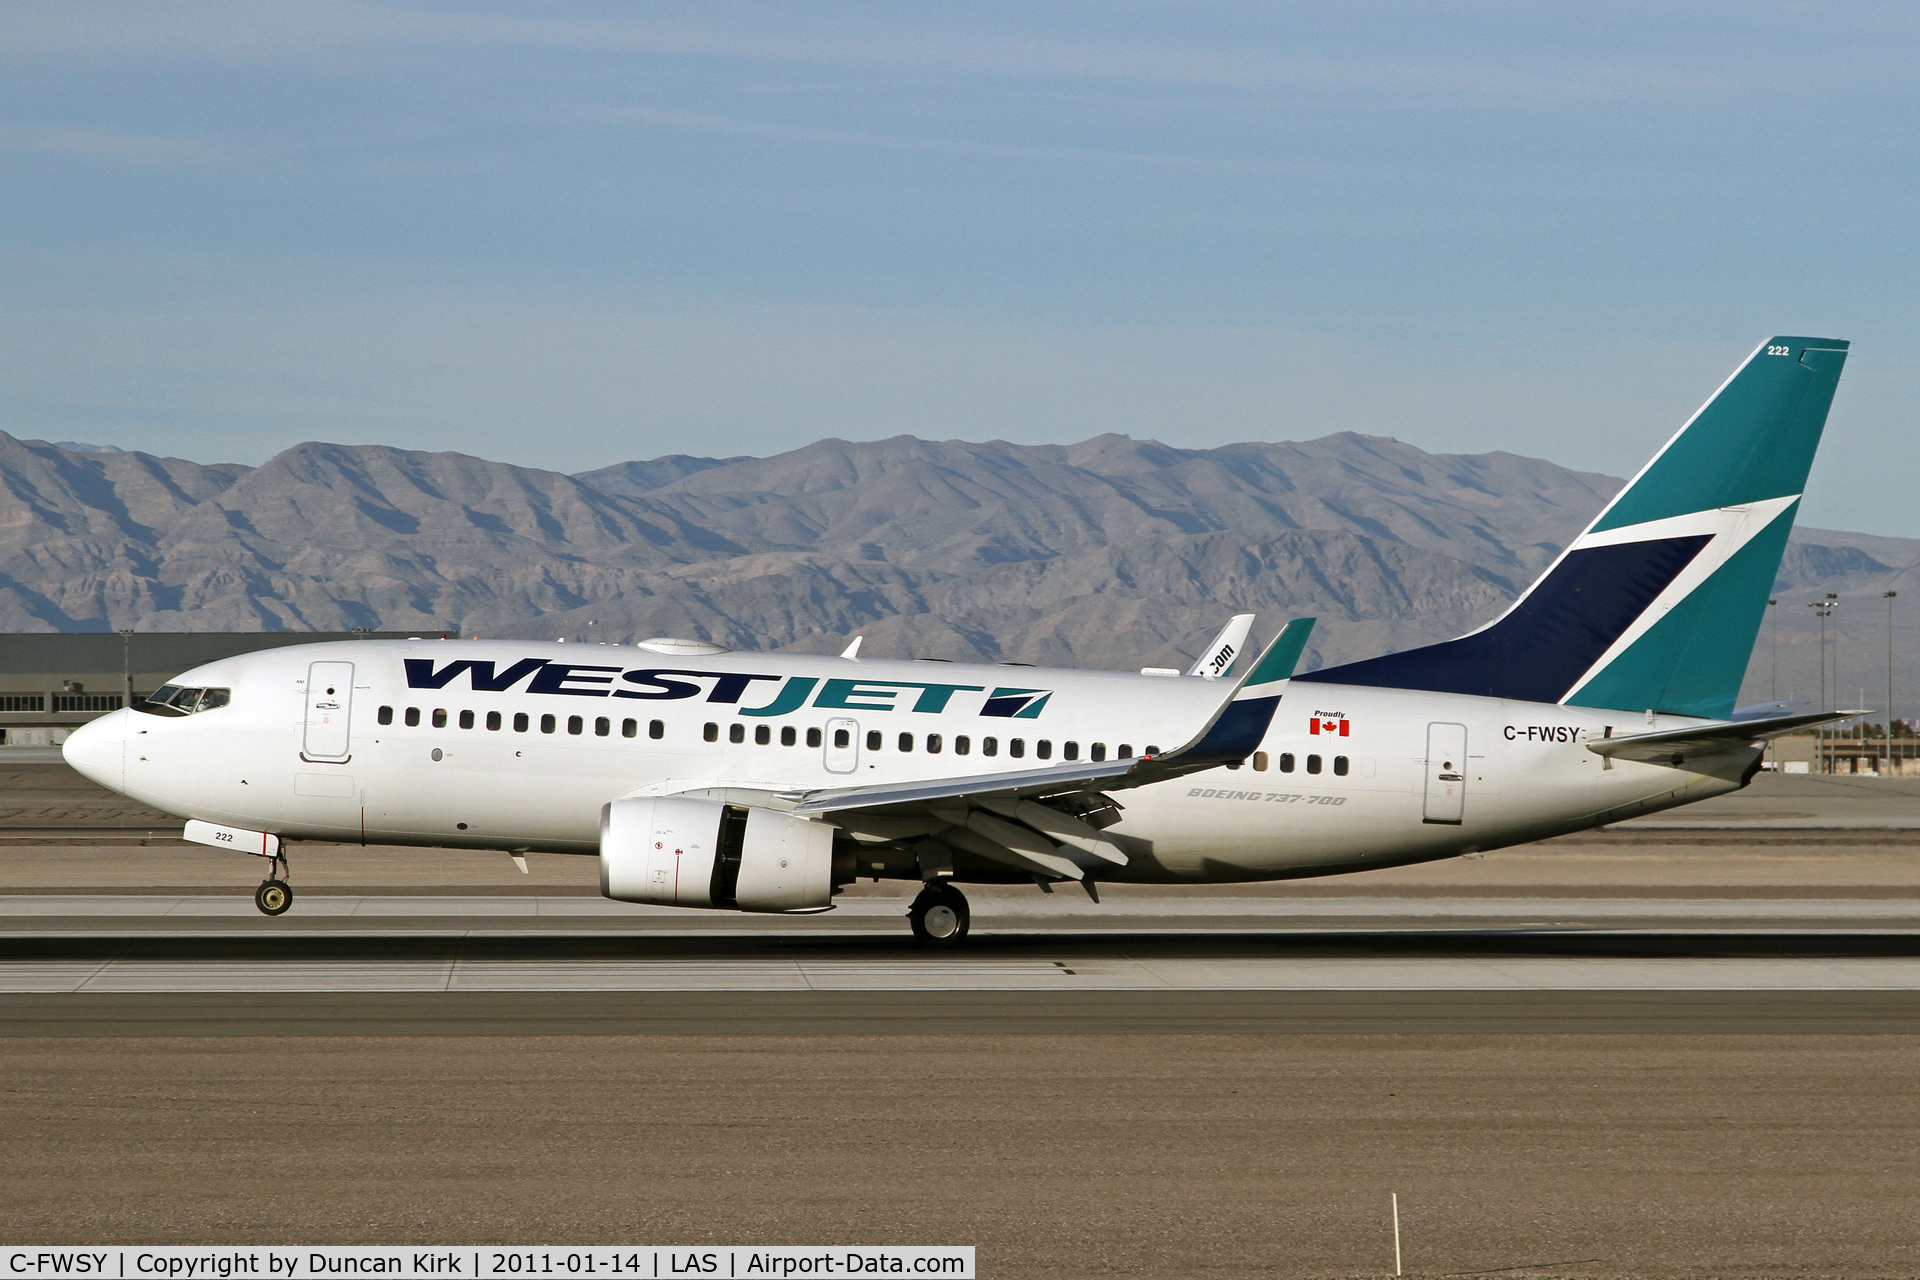 C-FWSY, 2004 Boeing 737-7CT C/N 32762, West Jet has several flights to Las Vegas daily